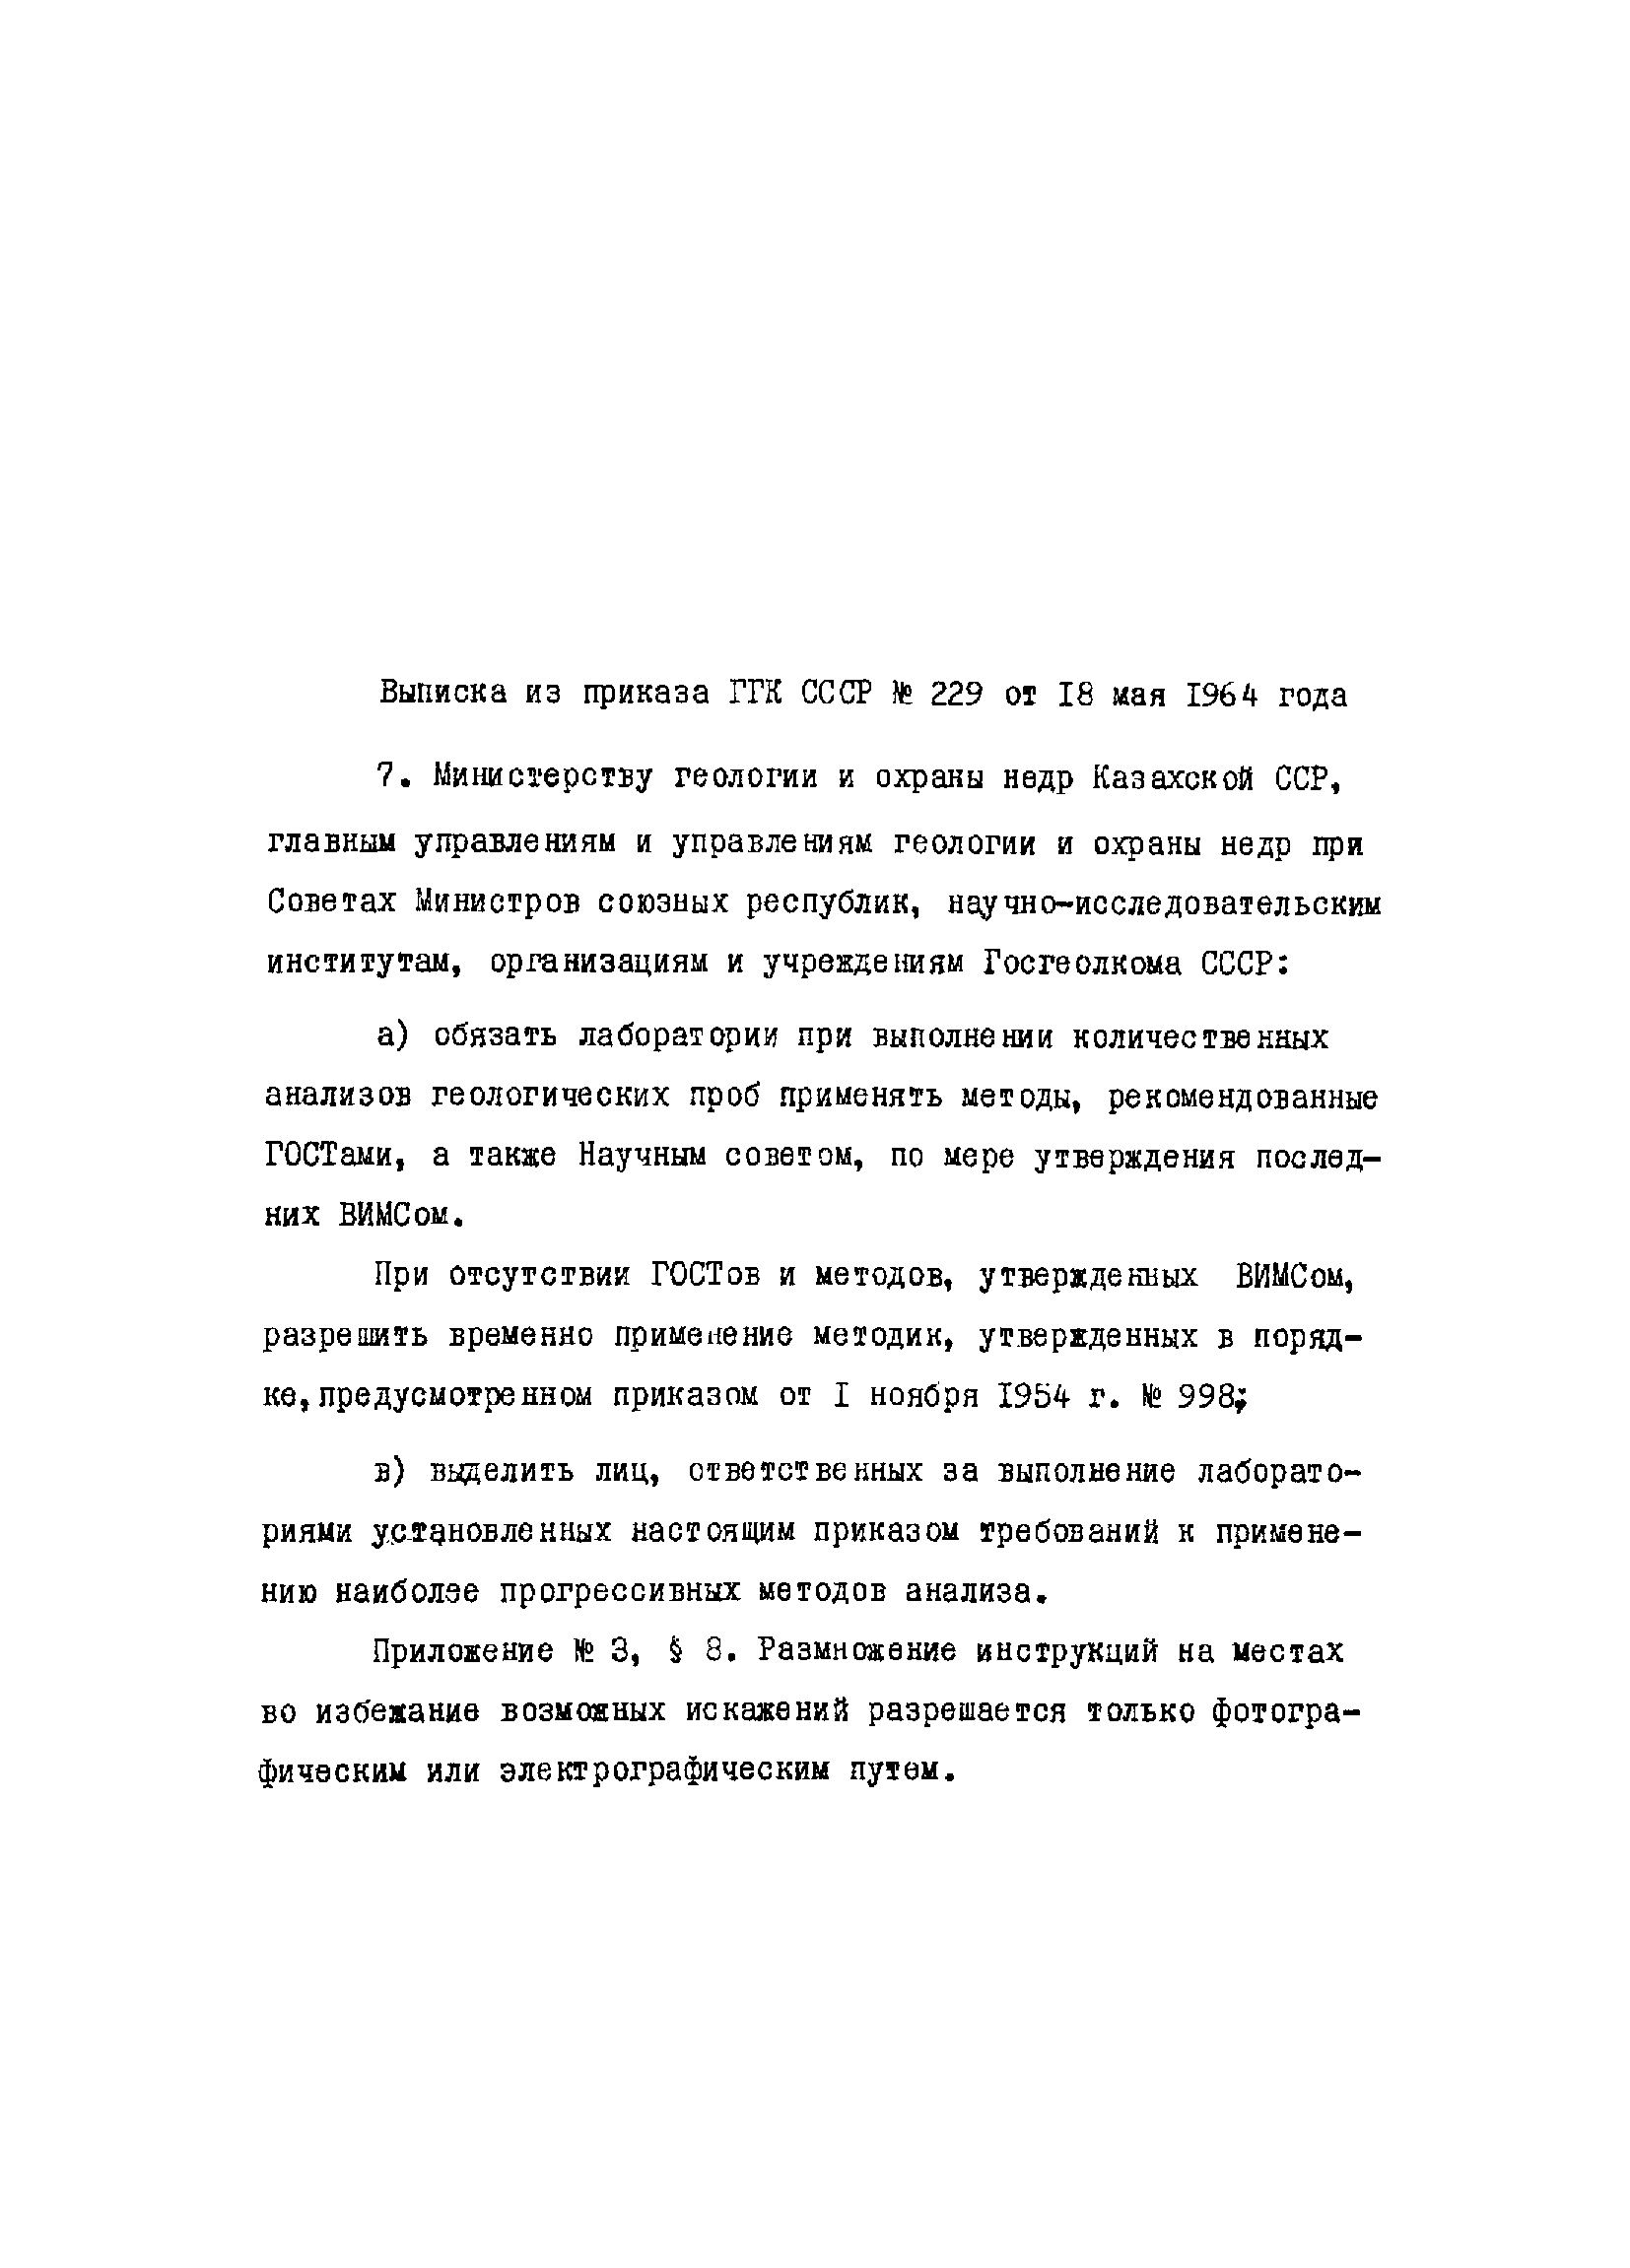 Инструкция НСАМ 90-Х